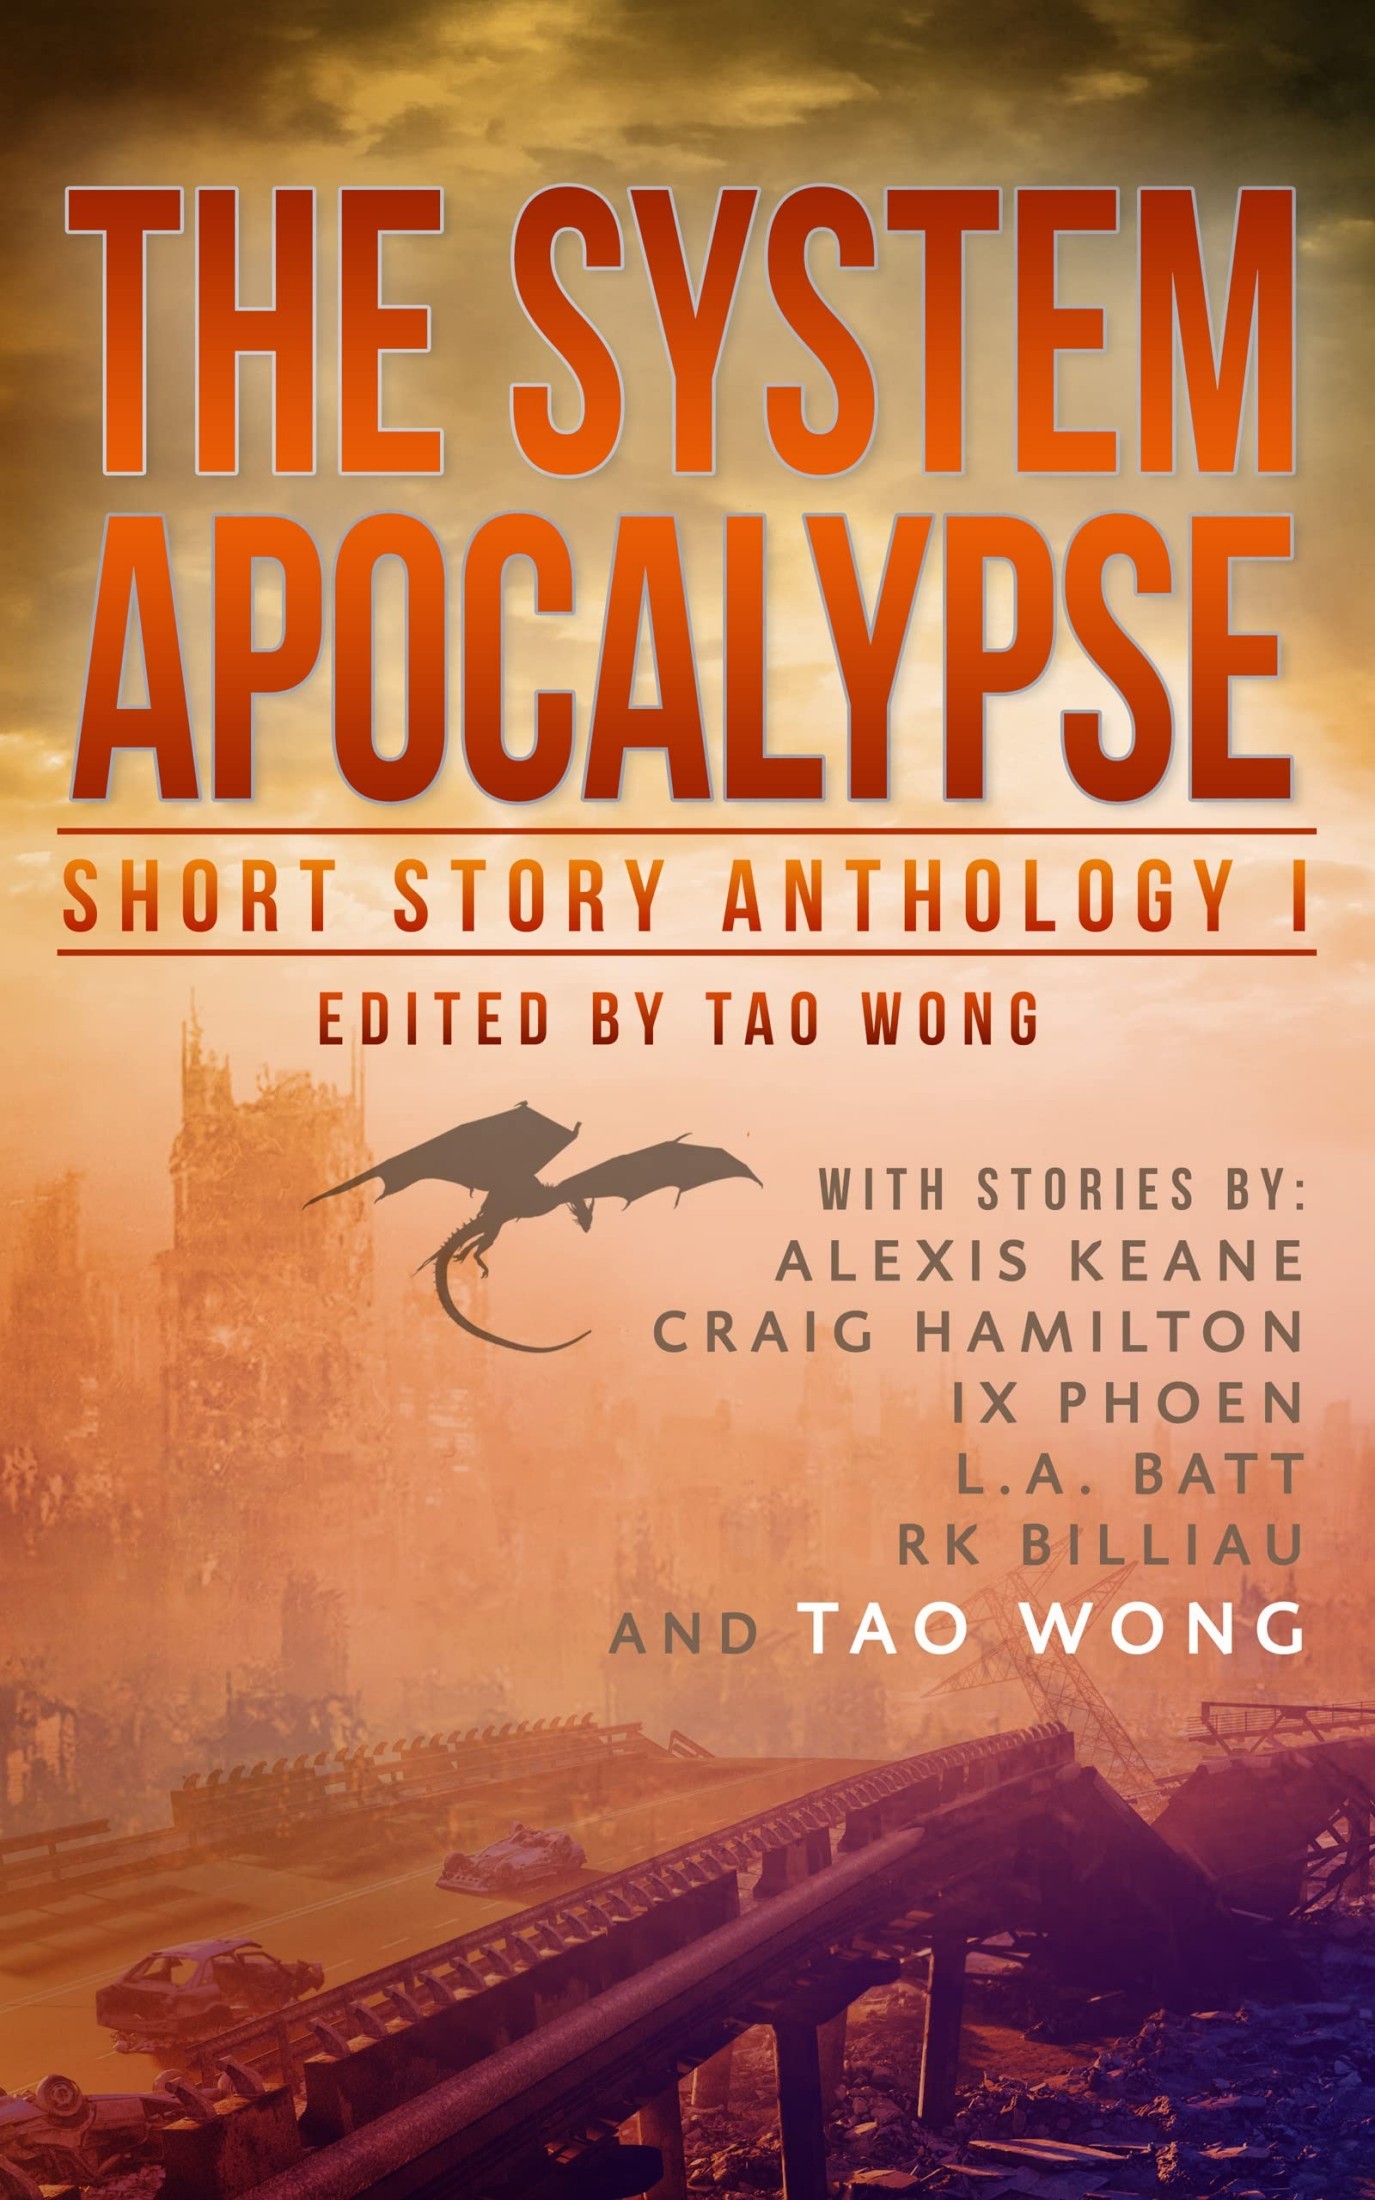 The System Apocalypse Short Story Anthology, Volume 1